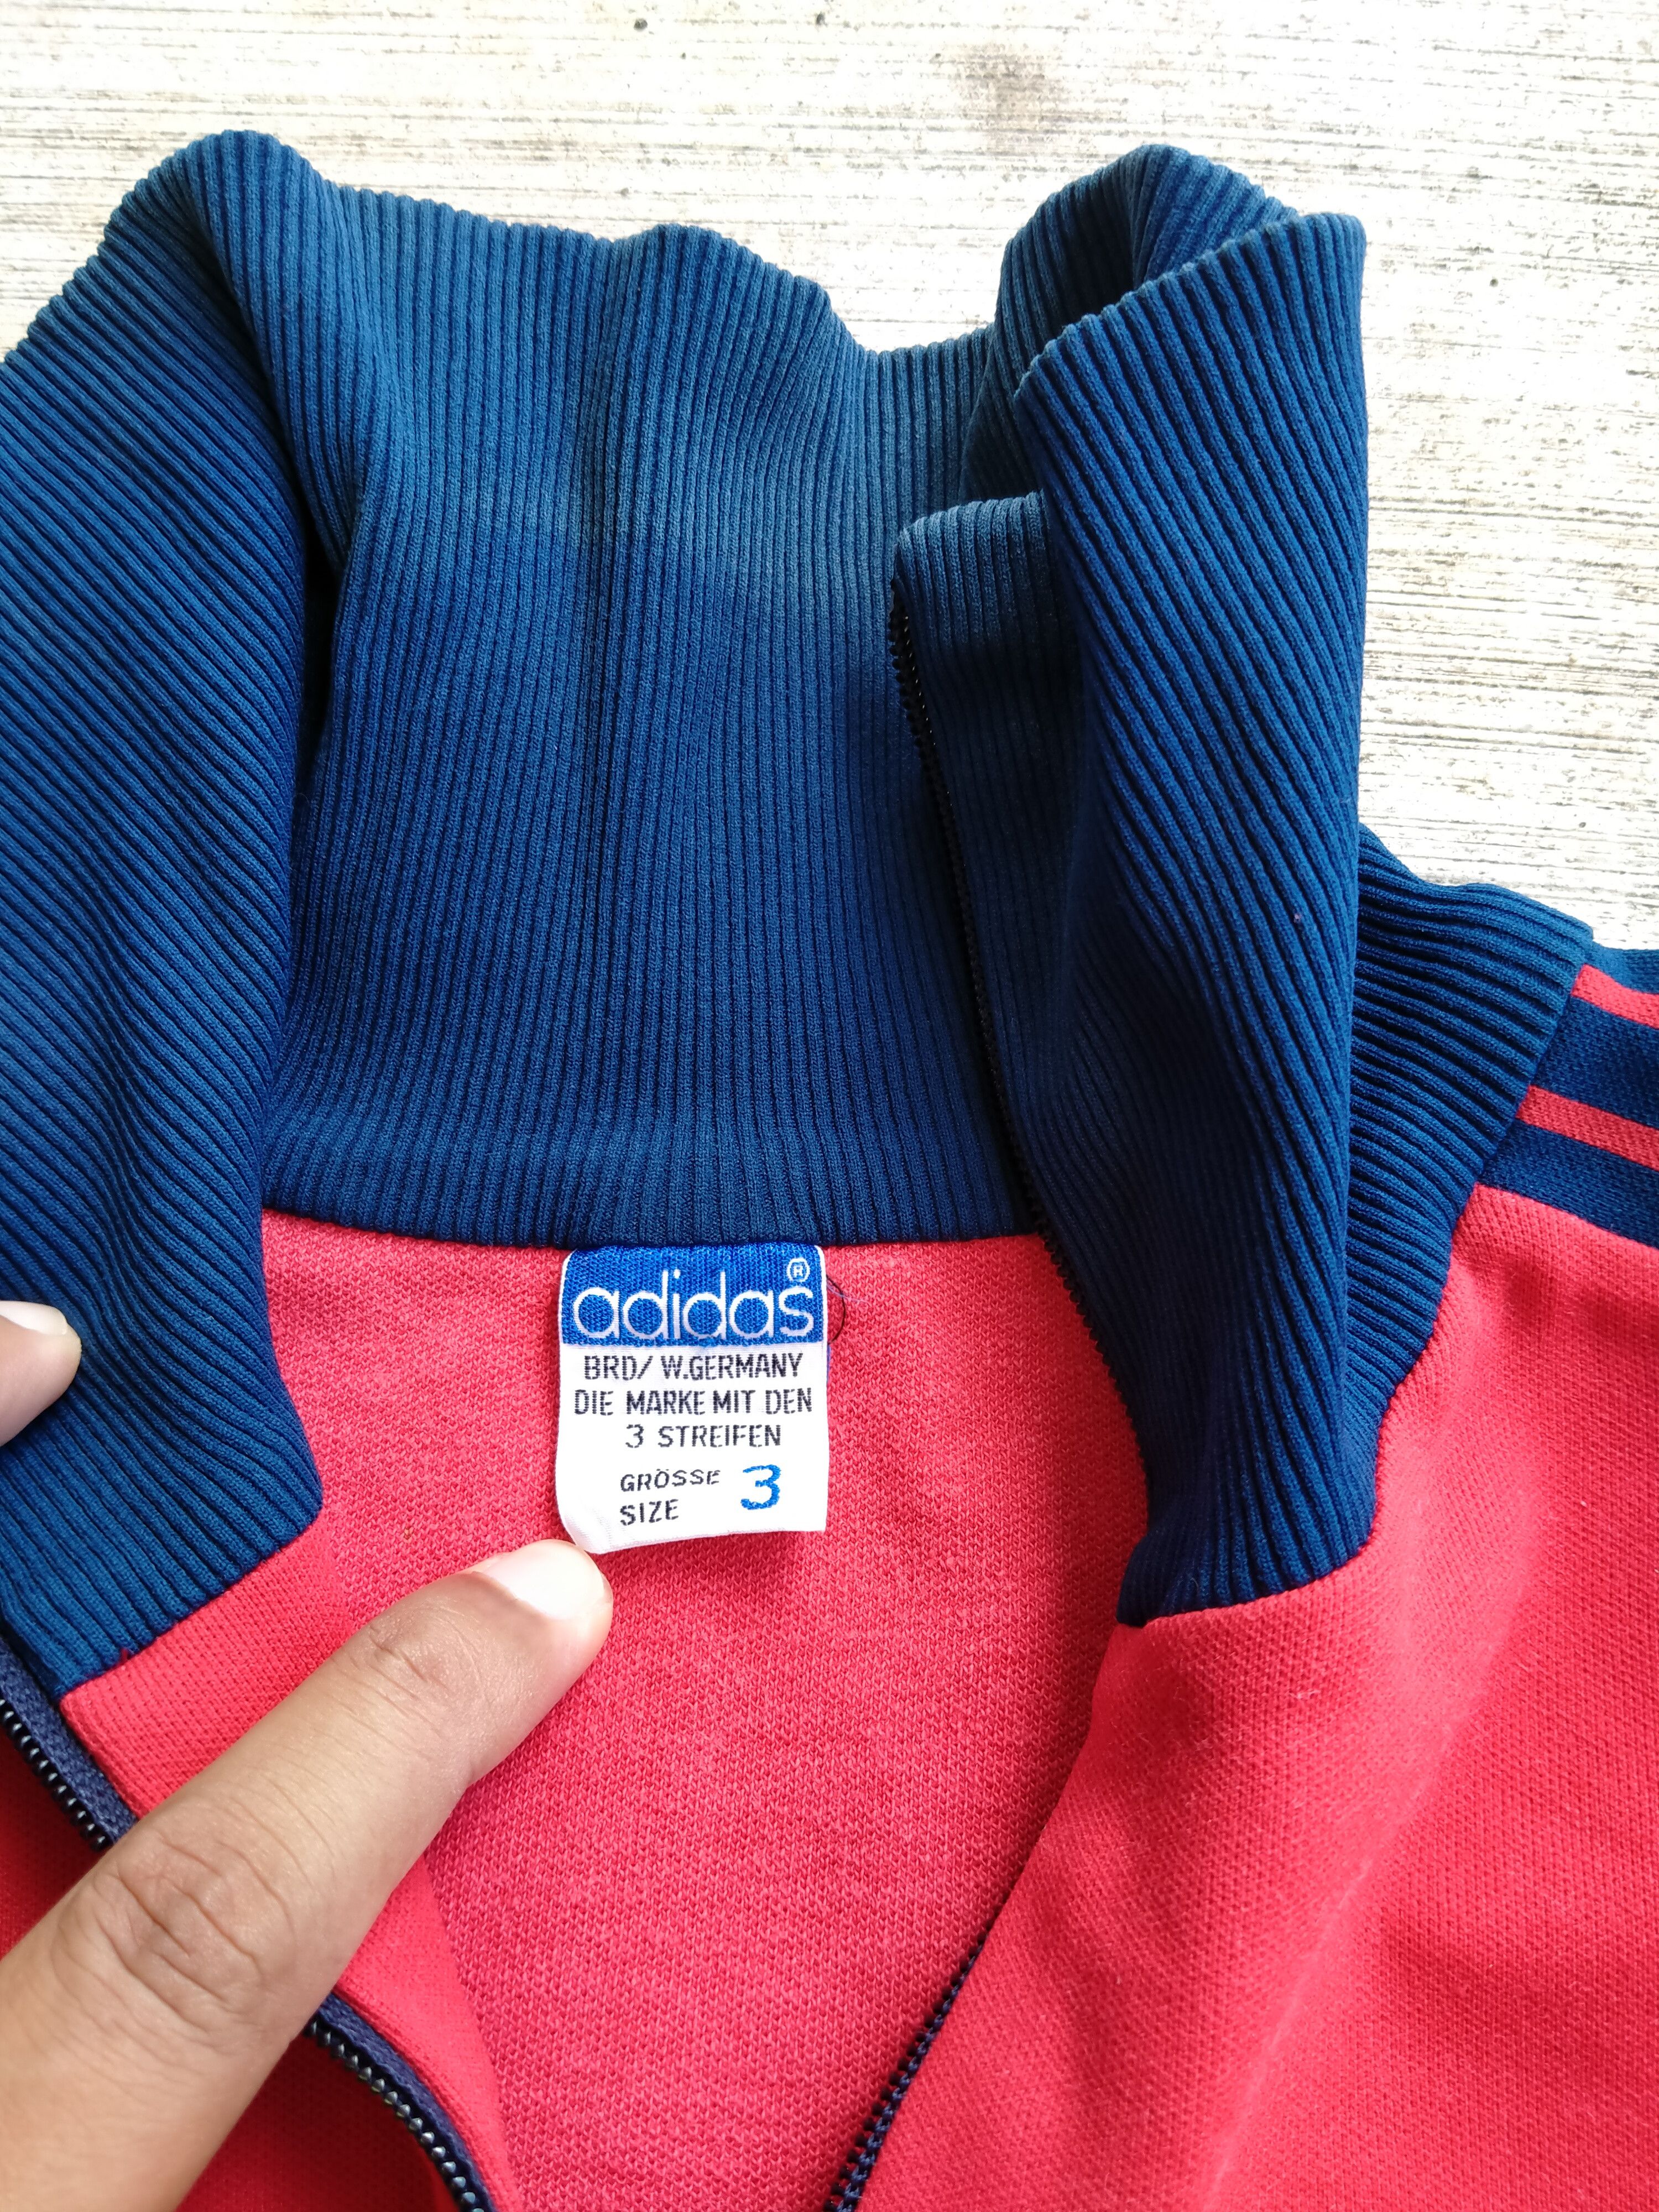 Adidas Rare Adidas Vintage 80s Red x Blue Tracktop Size US M / EU 48-50 / 2 - 5 Thumbnail